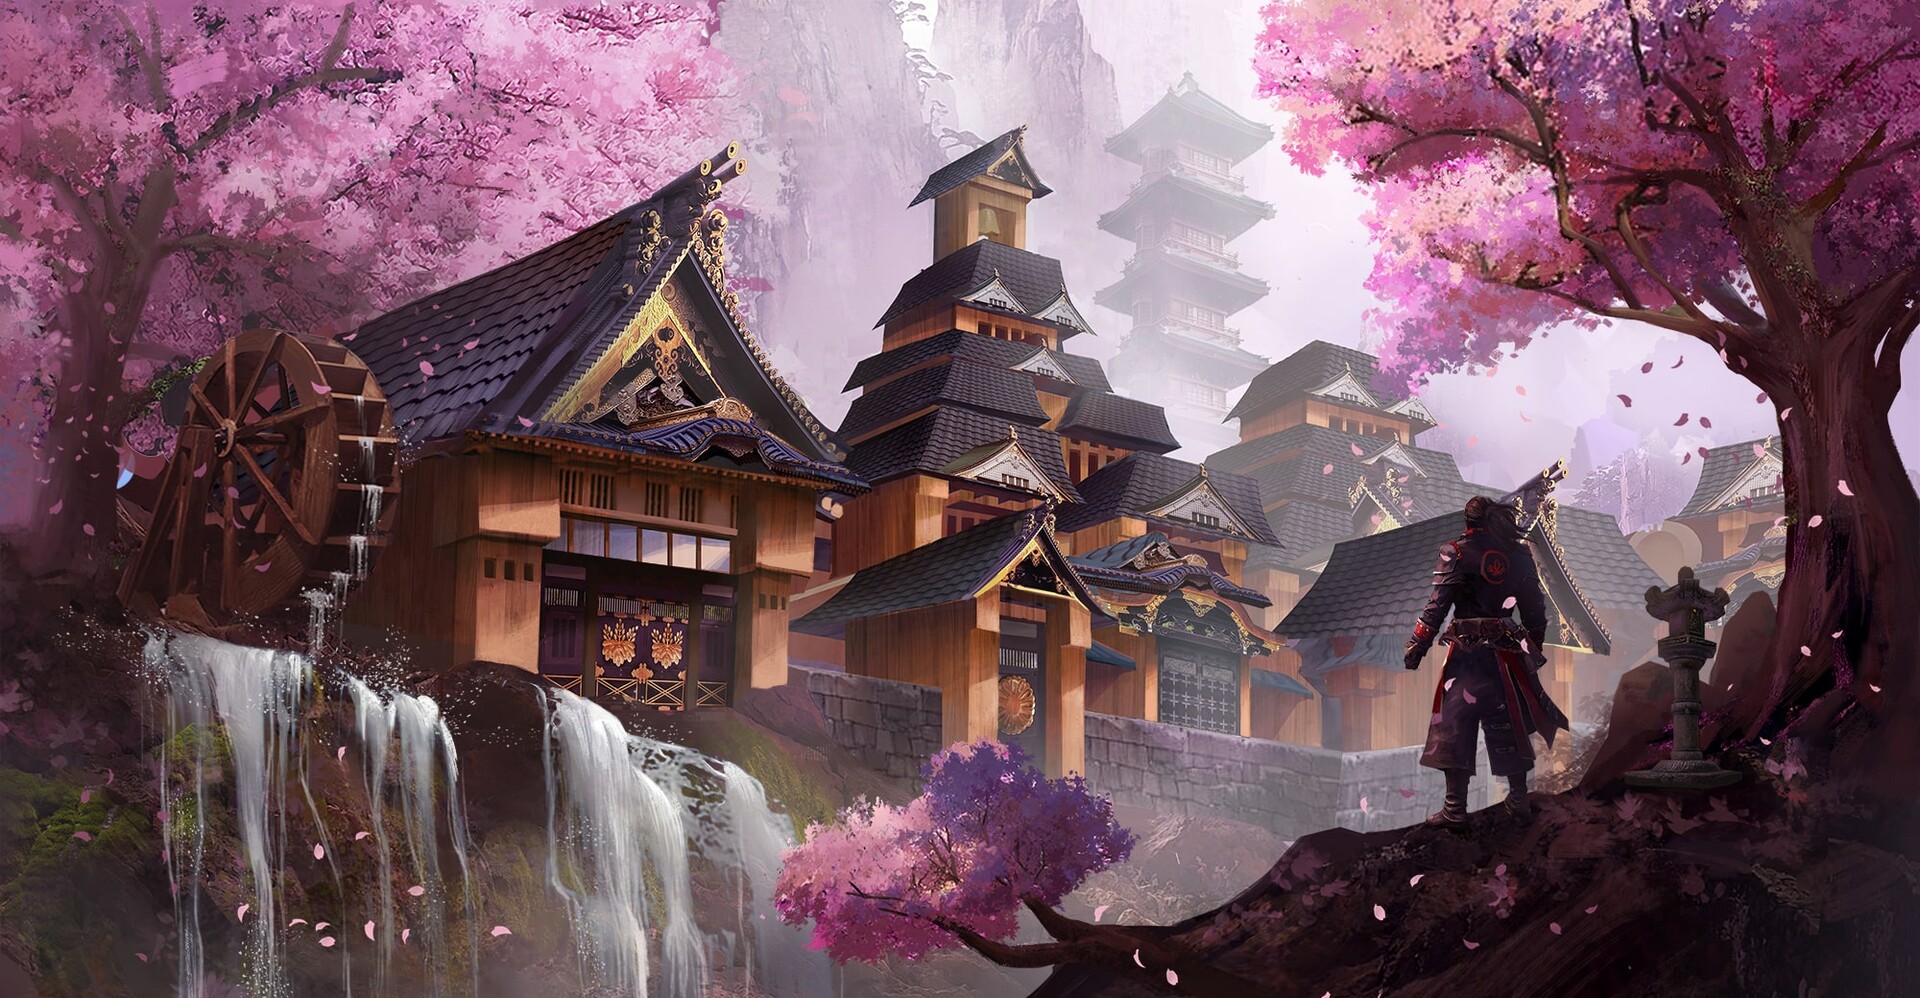 Artwork Fantasy Art Waterfall Cherry Blossom Architecture Asian Architecture 1920x998